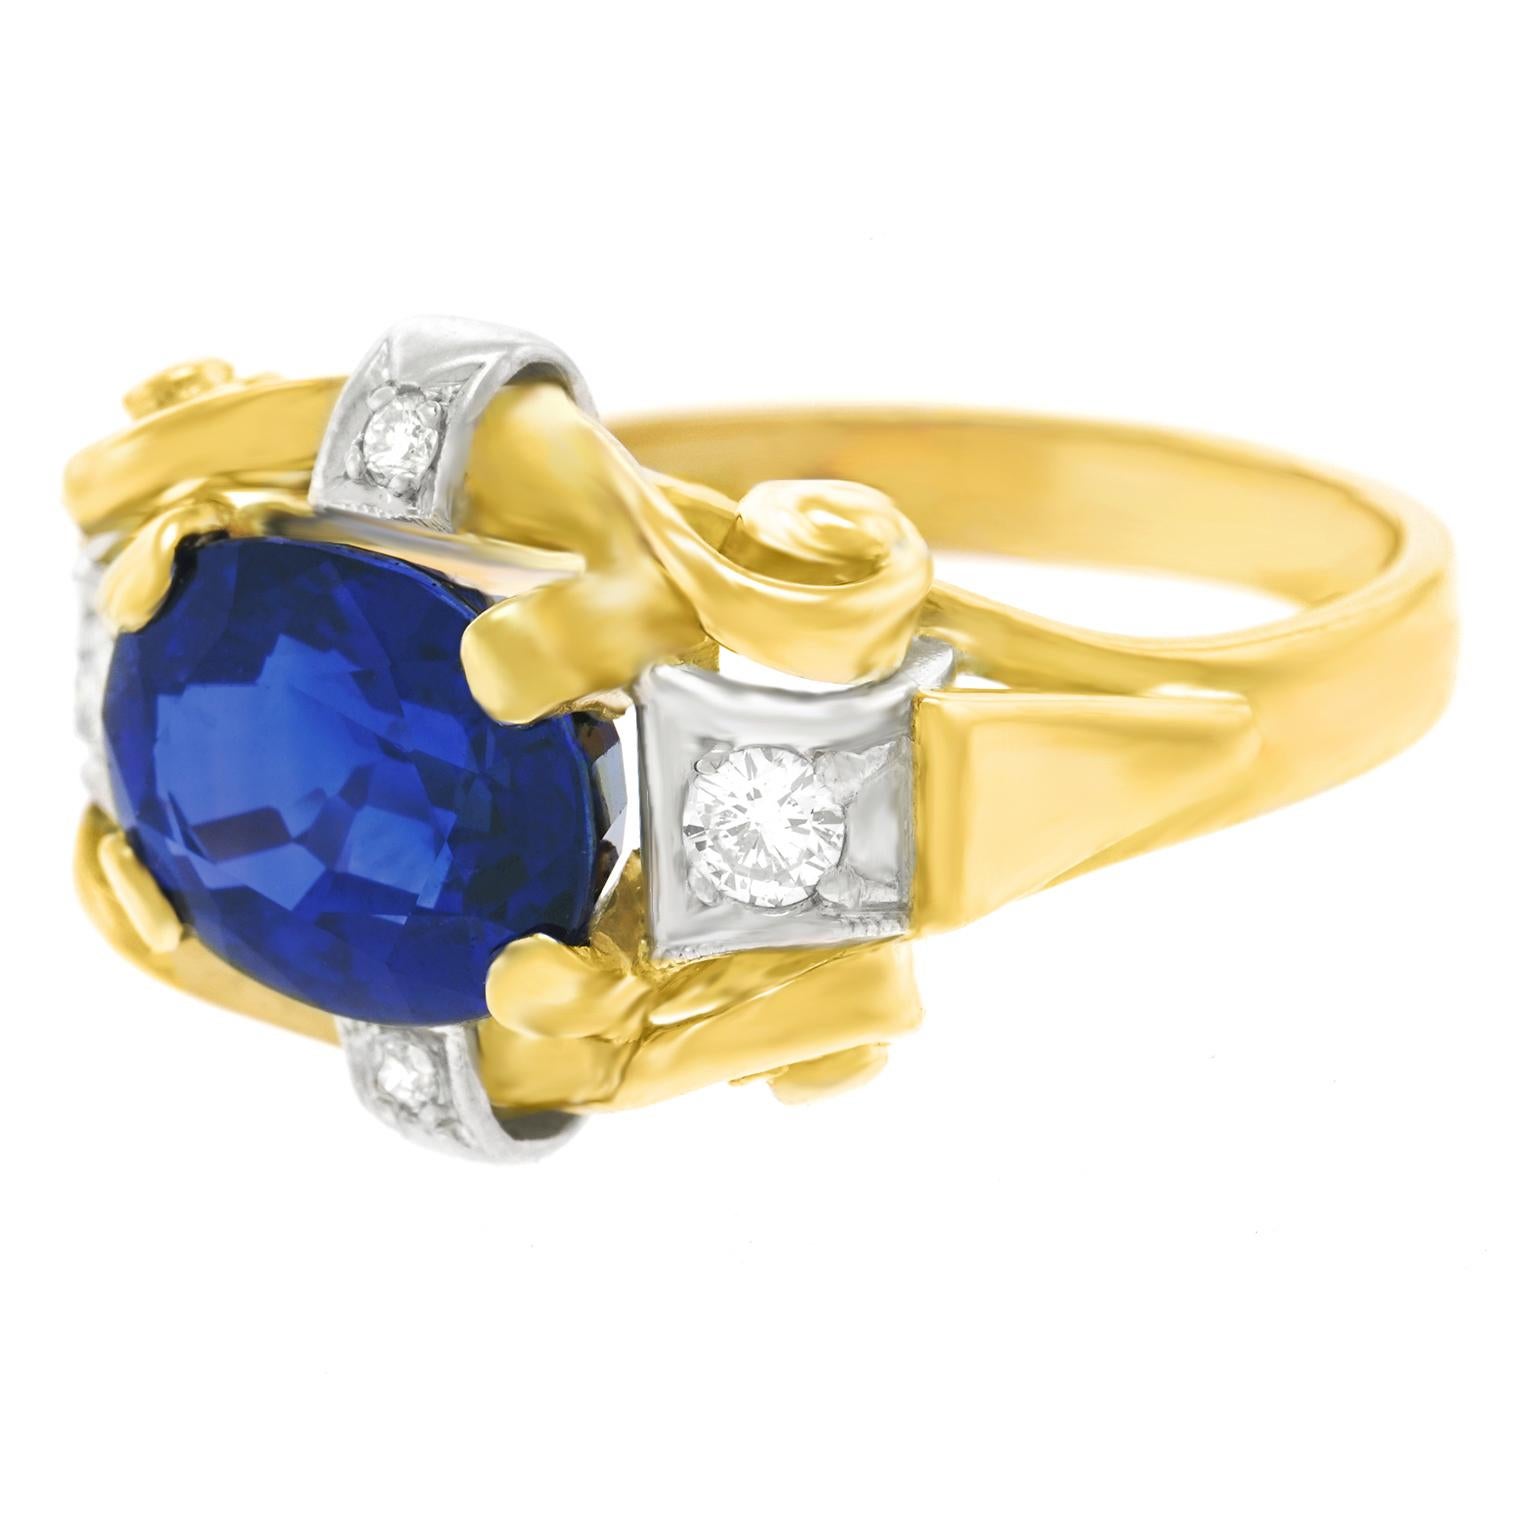 Brilliant Cut 4.01 Carat Sapphire and Diamond Art Deco Ring